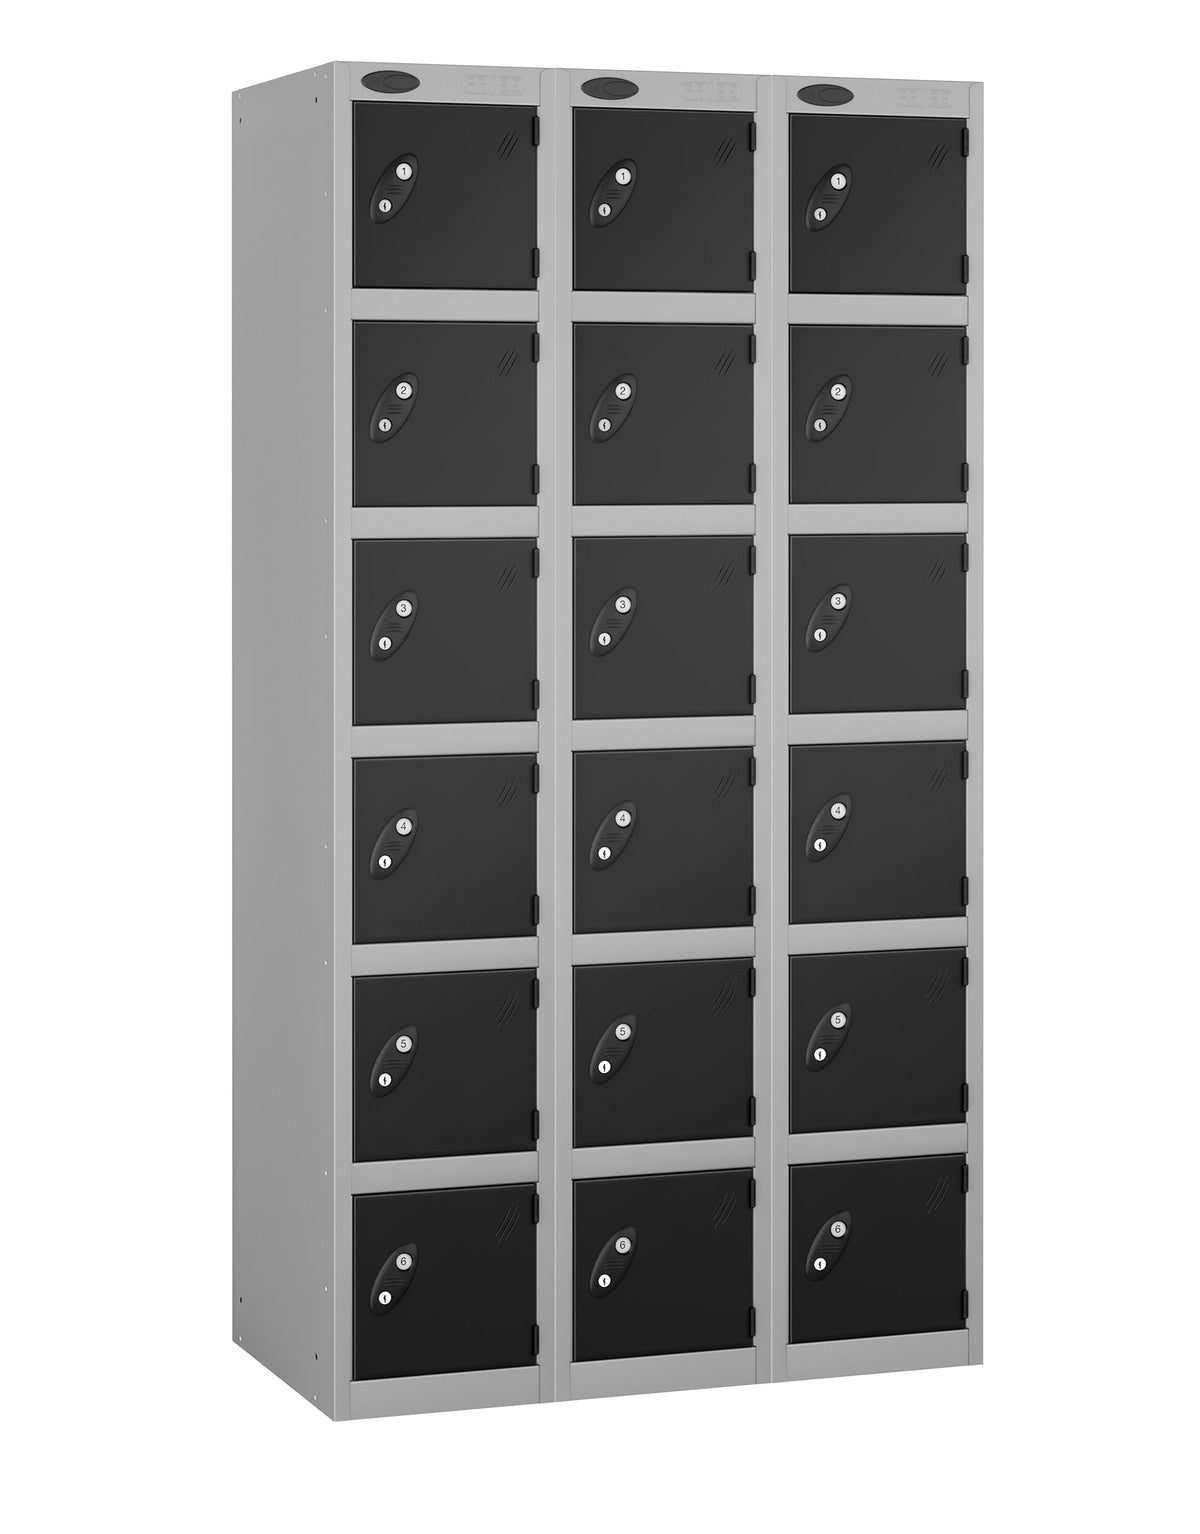 PROBEBOX STANDARD 3 NEST STEEL LOCKERS - JET BLACK 6 DOOR Storage Lockers > Lockers > Cabinets > Storage > Probe > One Stop For Safety   